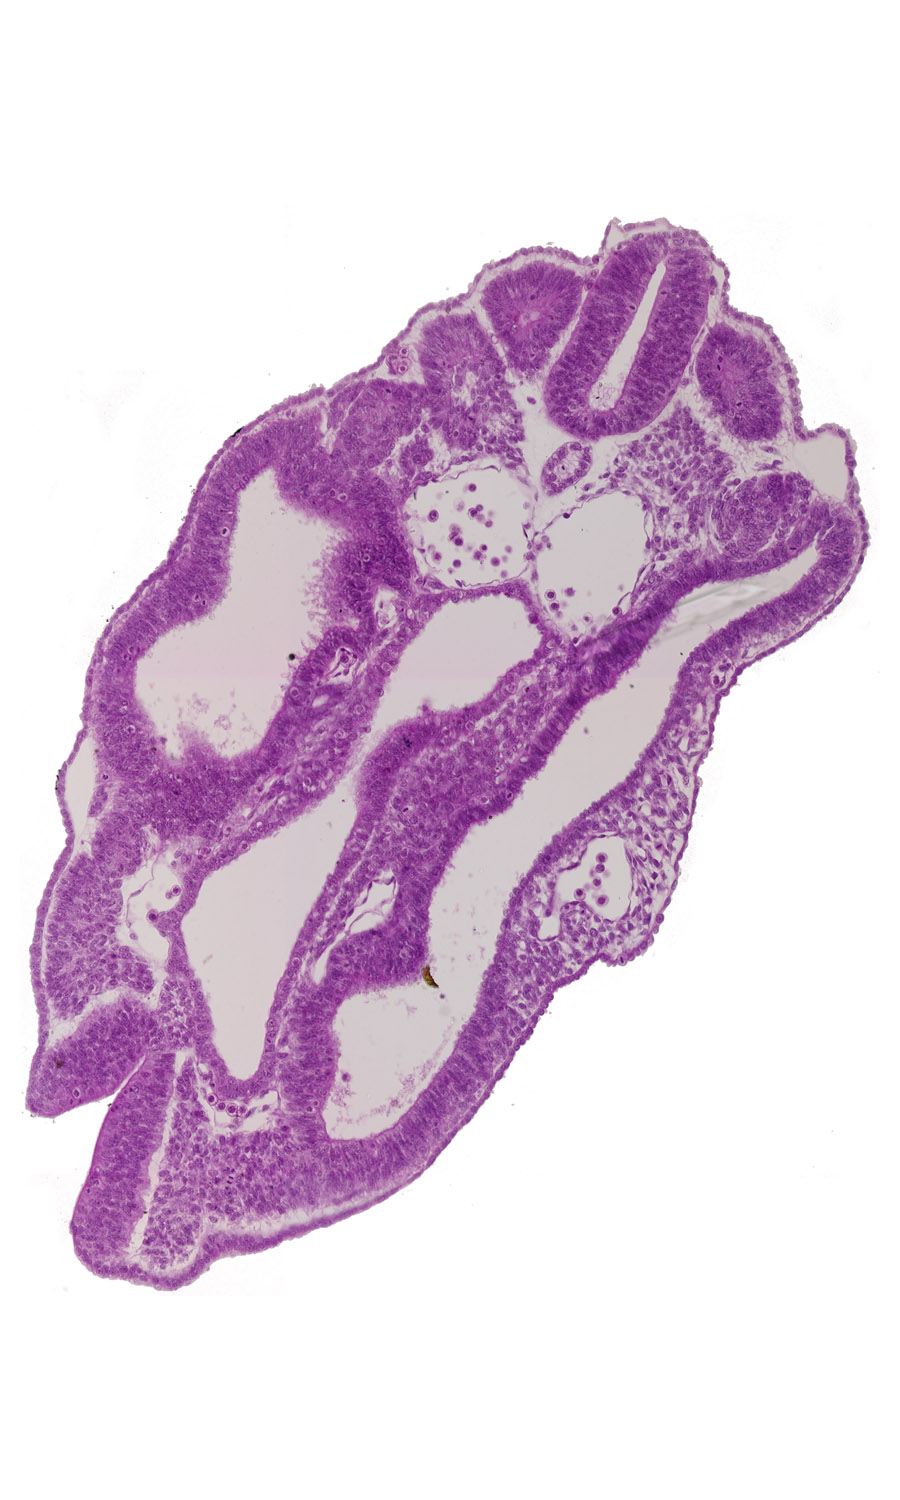 caudal neuropore, cephalic edge of dermatomyotome 16 (T-4), dermatomyotome 15 (T-3), dermatomyotome 15-16 intersegmental region, endoderm, junction of cloaca and hindgut, left common iliac artery, neural tube, notochord, peritoneal cavity, right common iliac artery, somatopleuric mesoderm, splanchnopleuric mesoderm, surface ectoderm, tributary of left umbilical vein